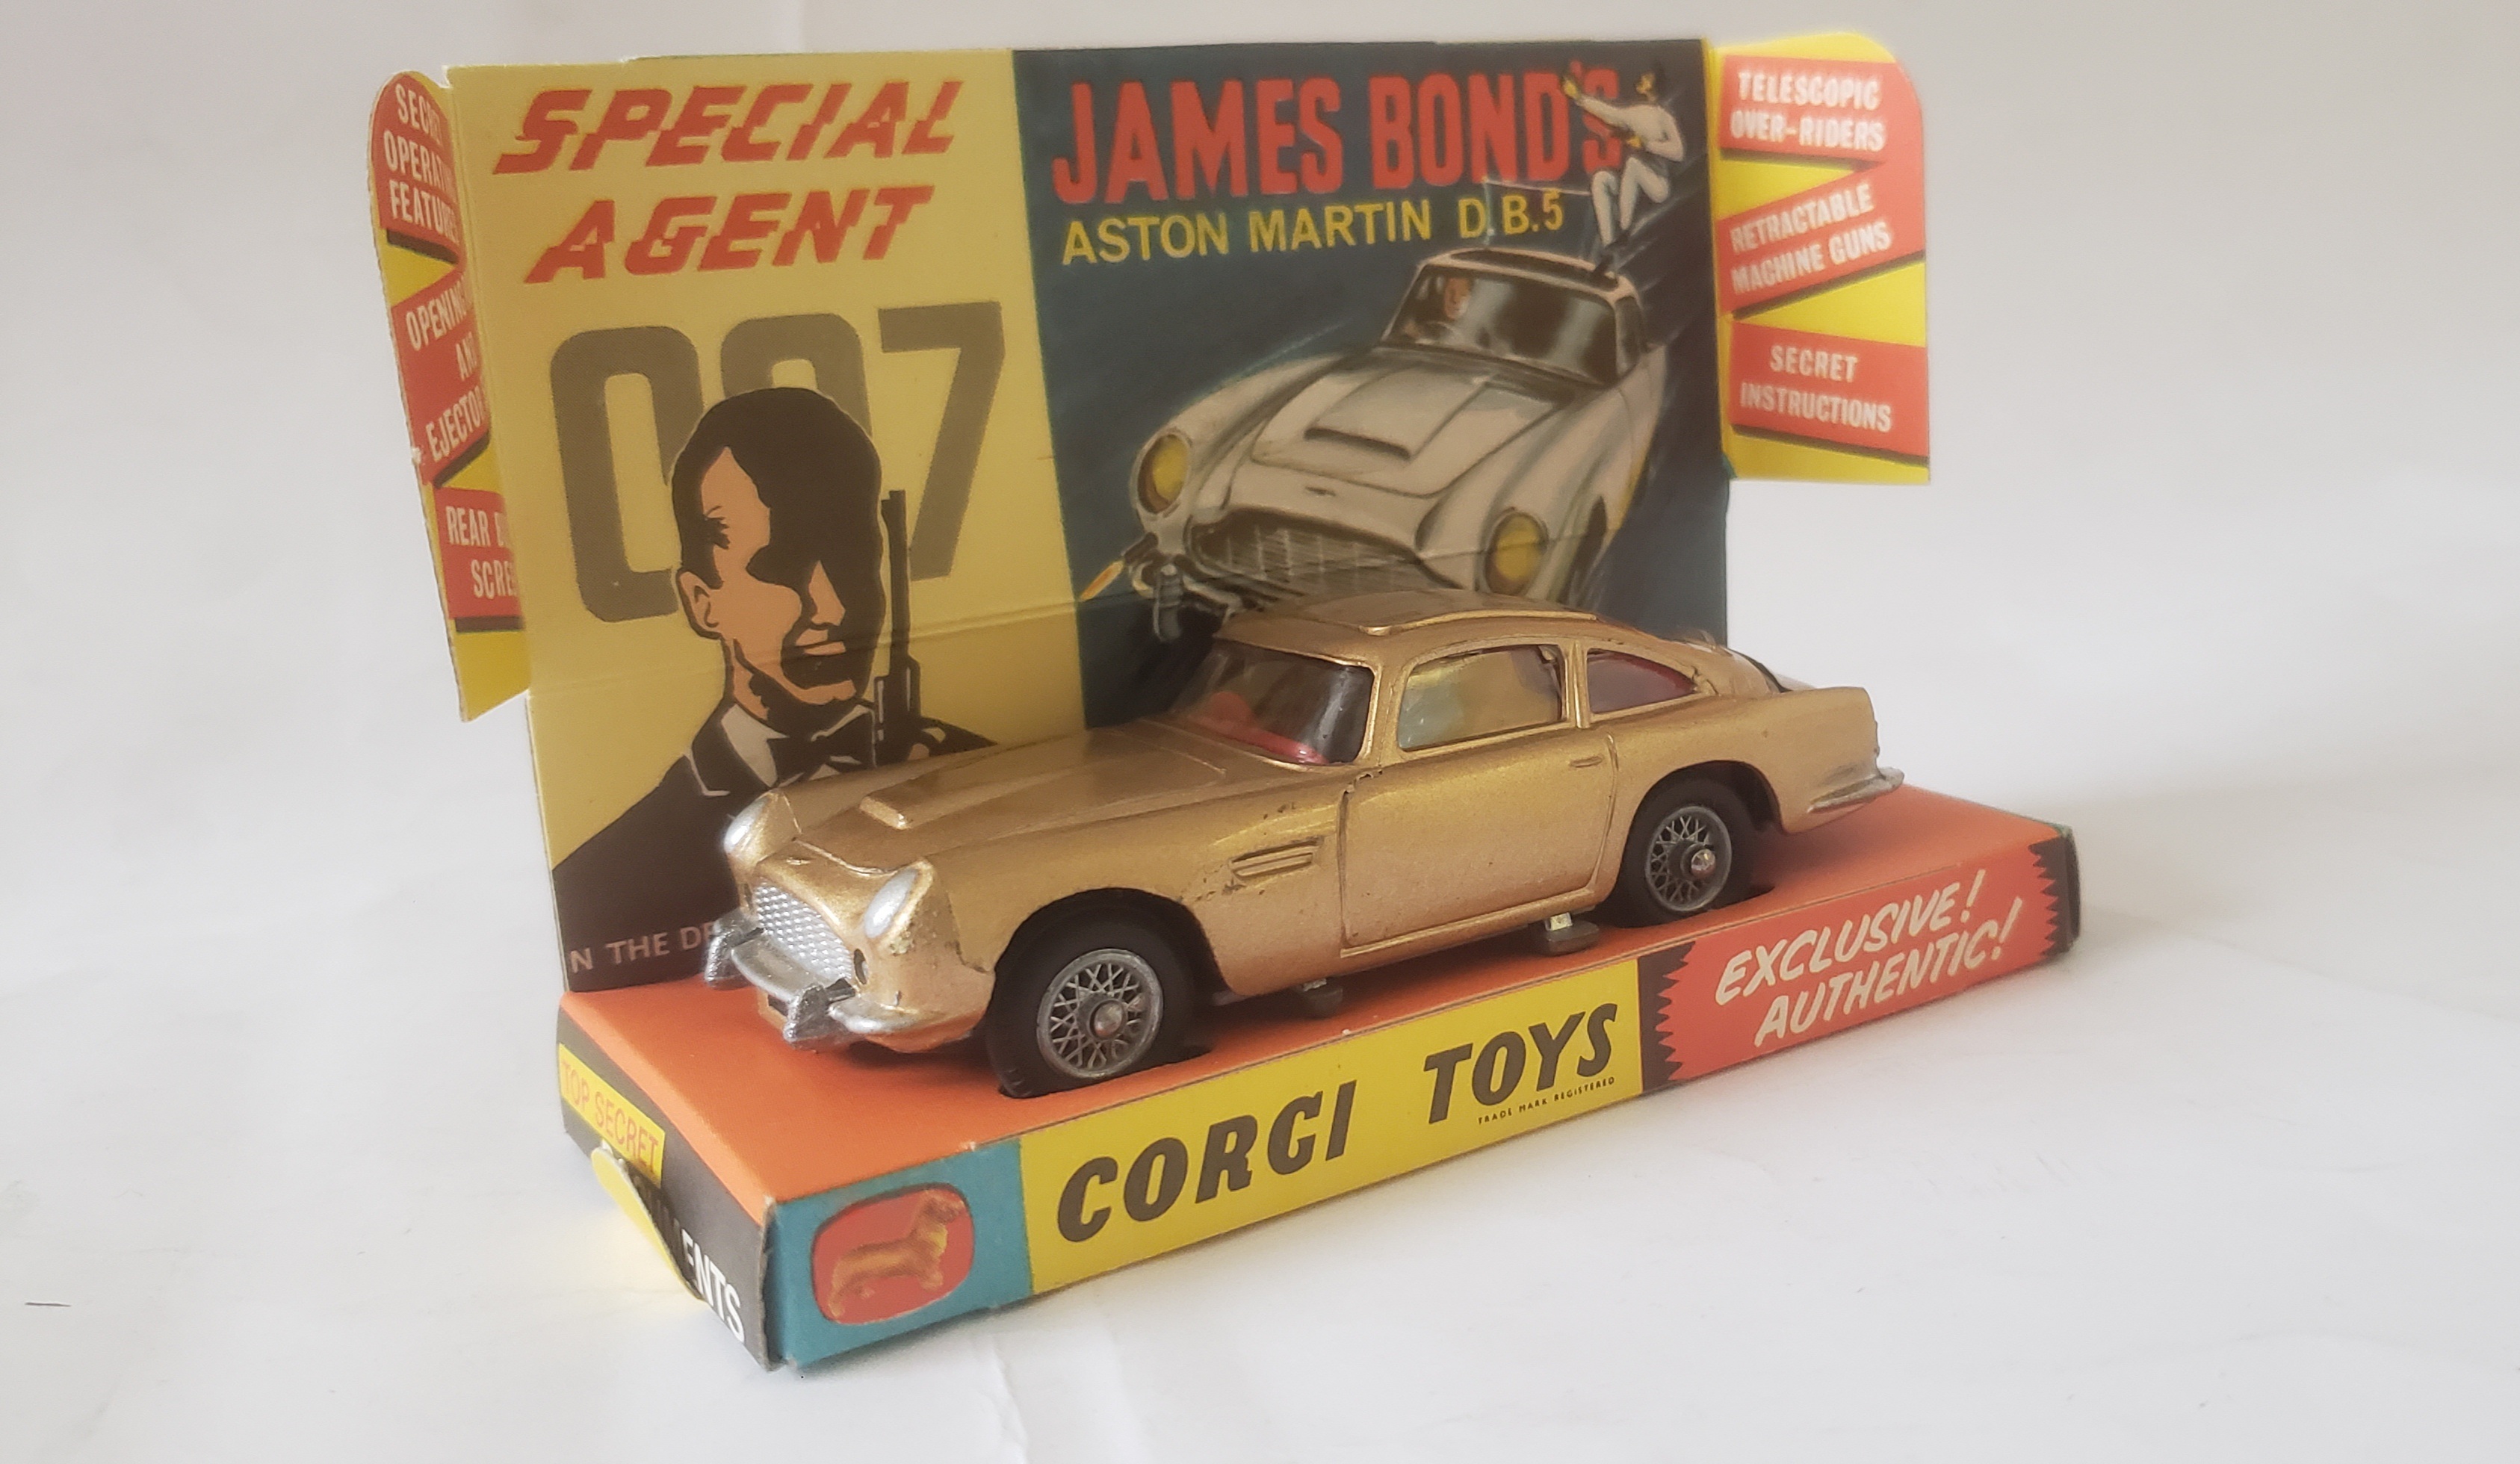 JAMES BOND, Corgi Toy no. 261 James Bonds Aston Martin D.B.5, with box, VG to EX